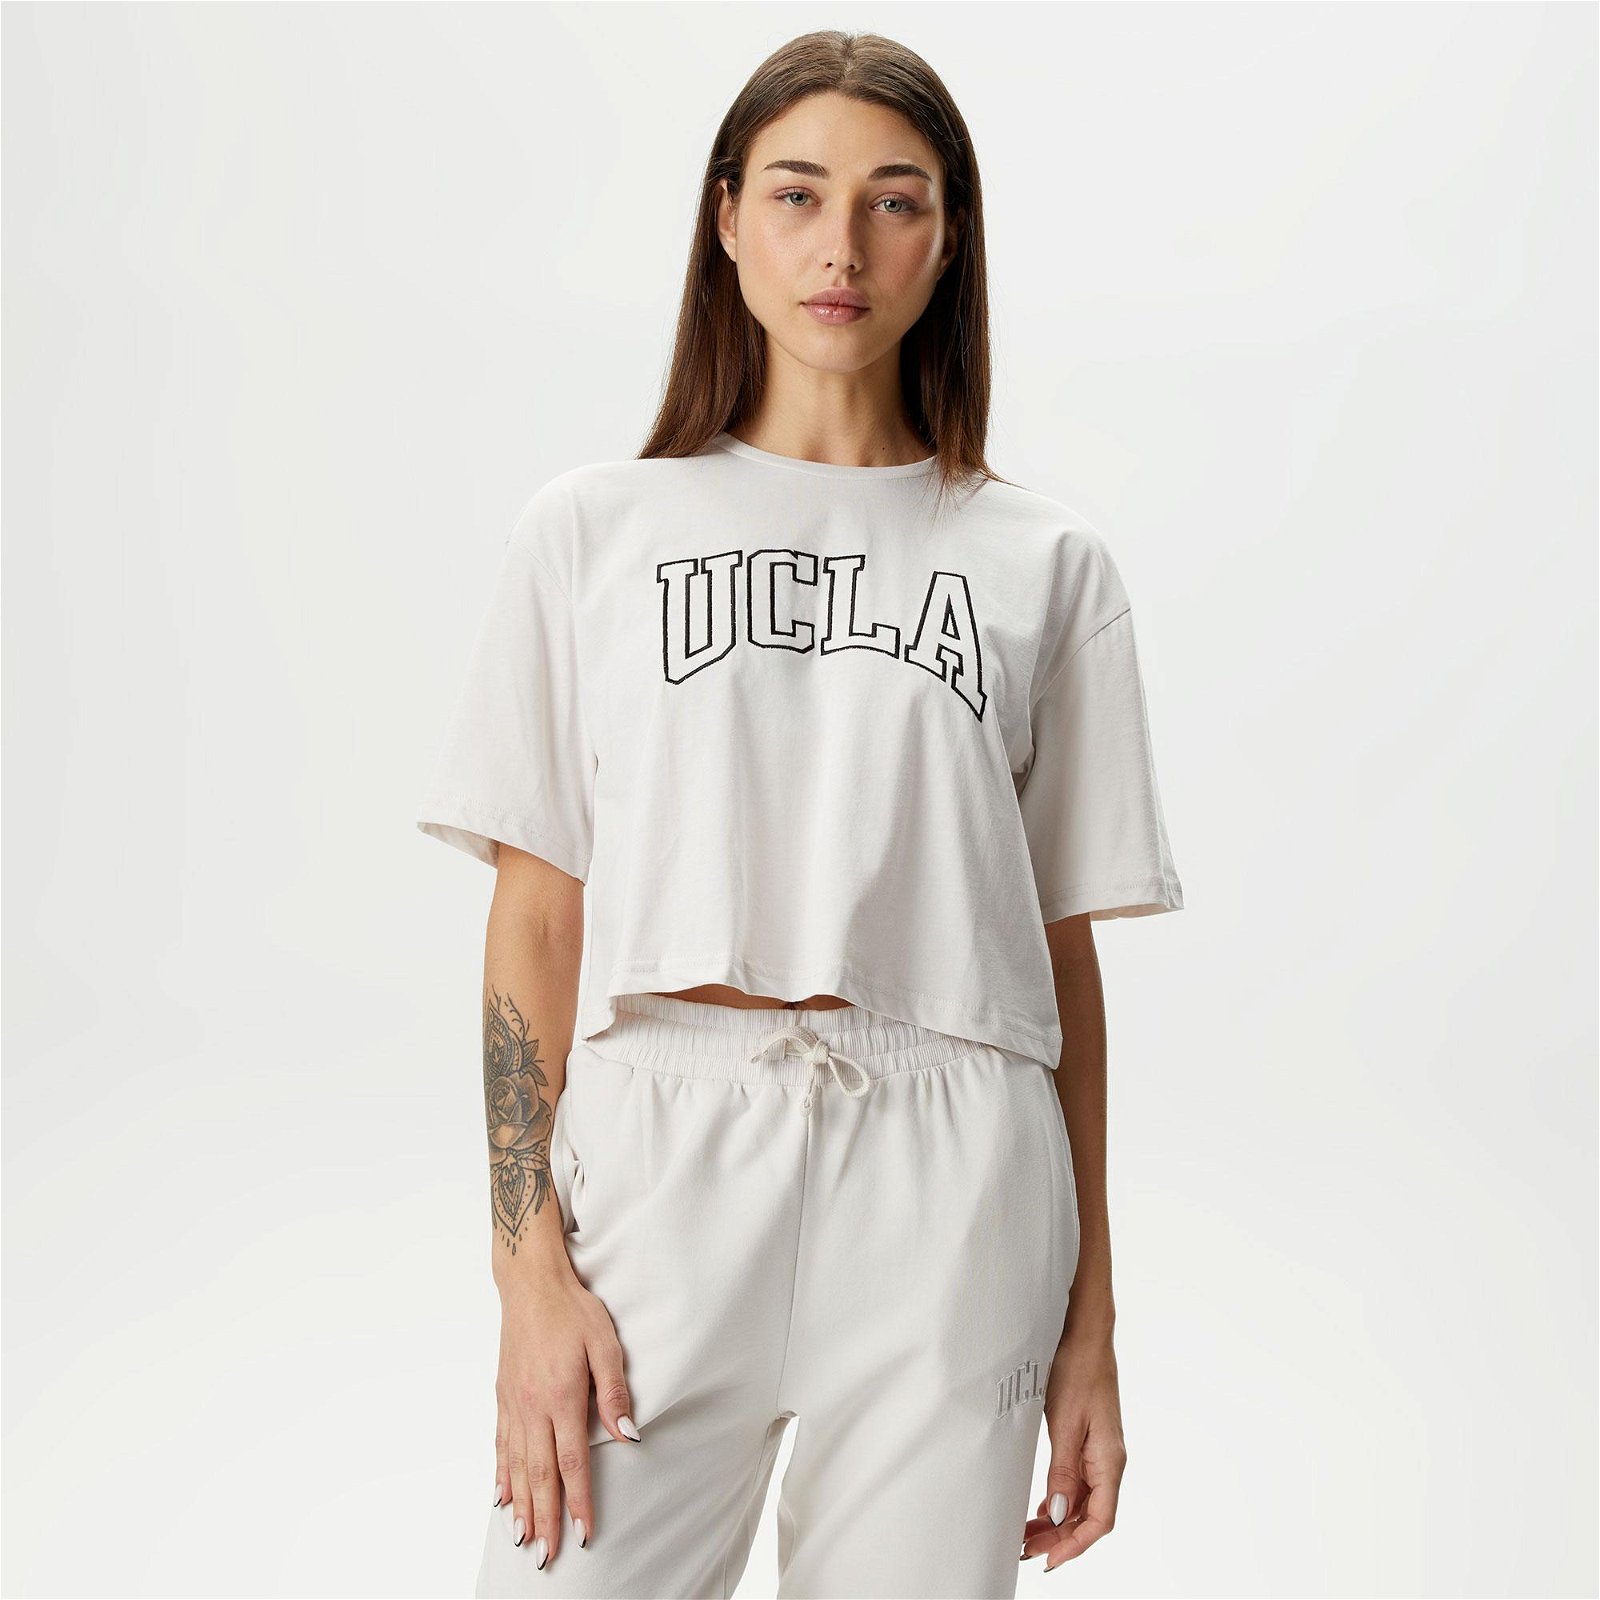 Ucla Helena Kadın Krem Rengi T-Shirt